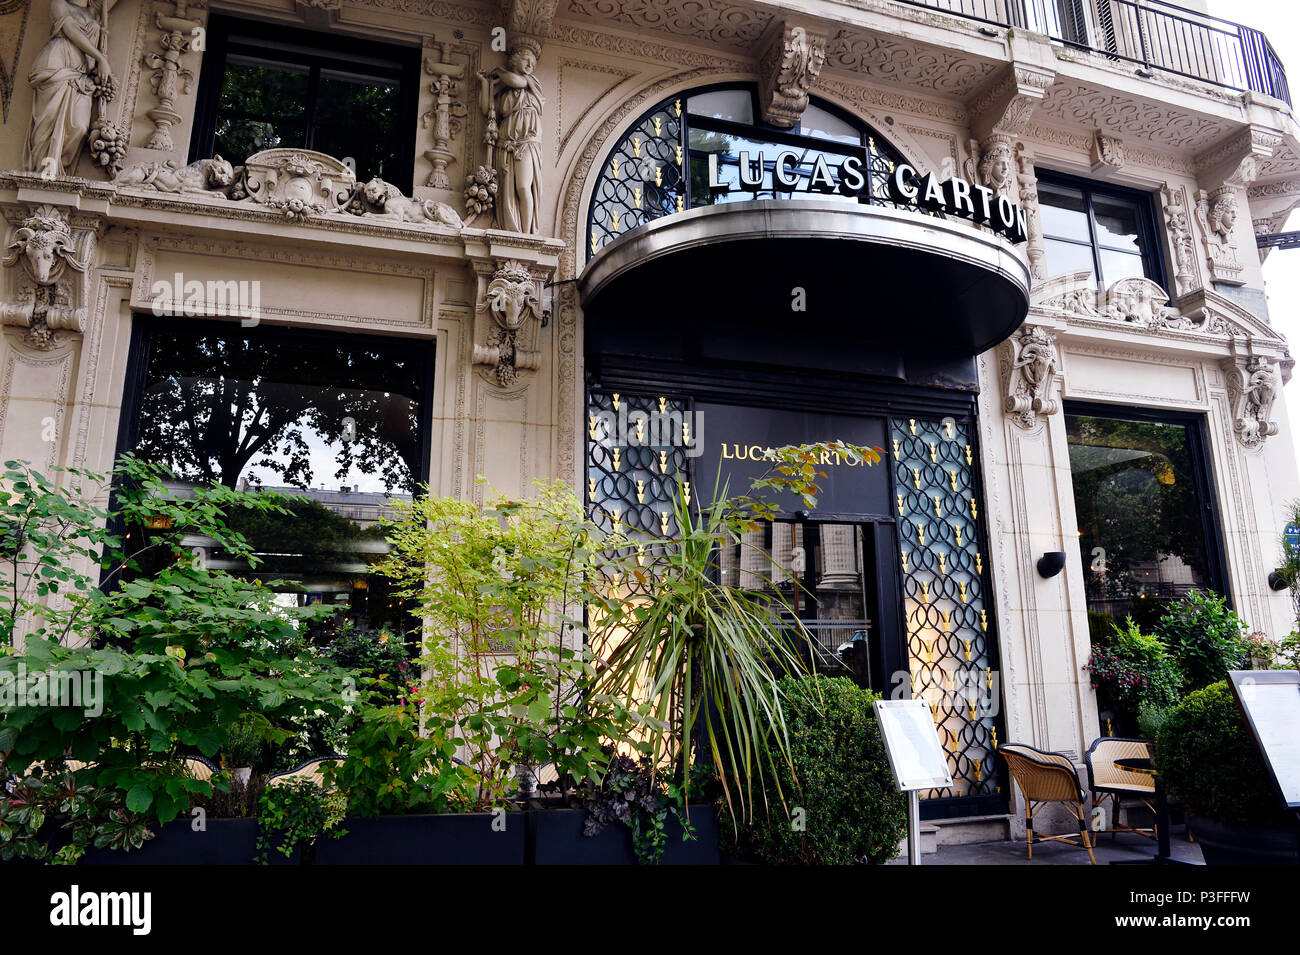 Lucas Carton Restaurant - Paris - France Stock Photo - Alamy